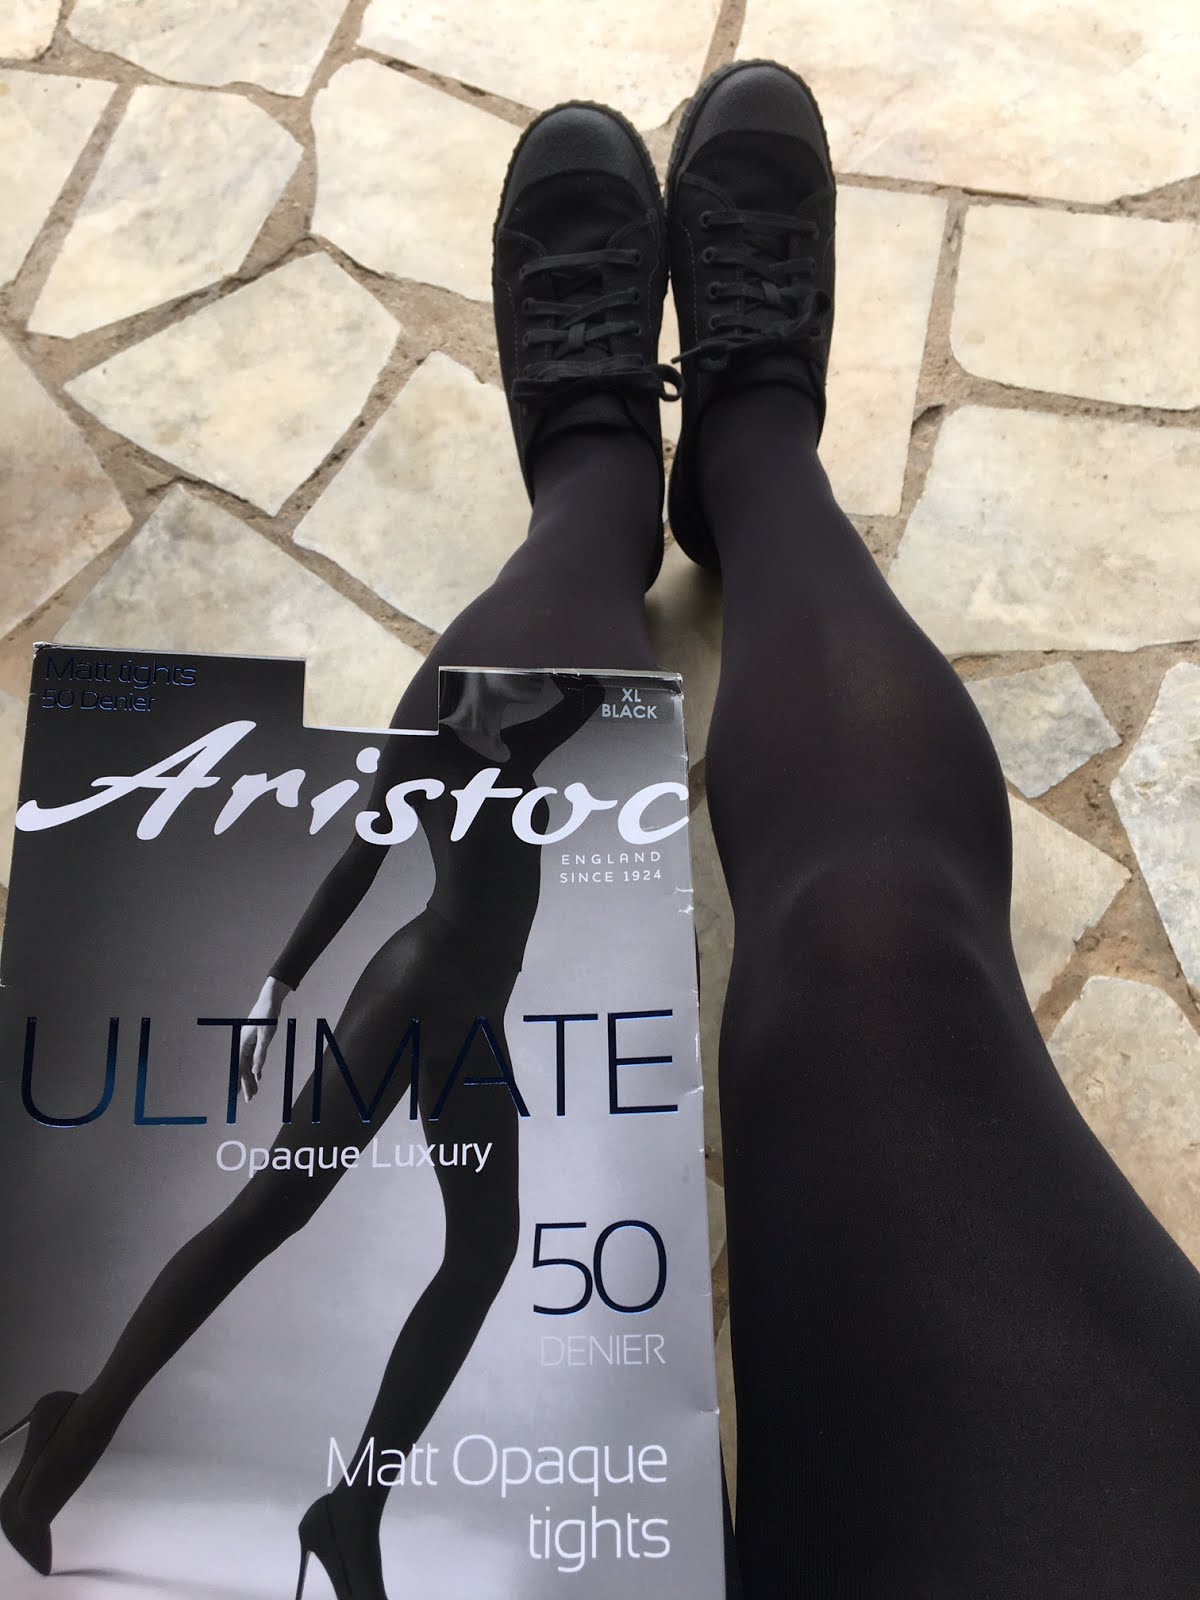 Hosiery For Men: Reviewed: NEW Aristoc Ultimate 50 Denier Matt Opaque Tights